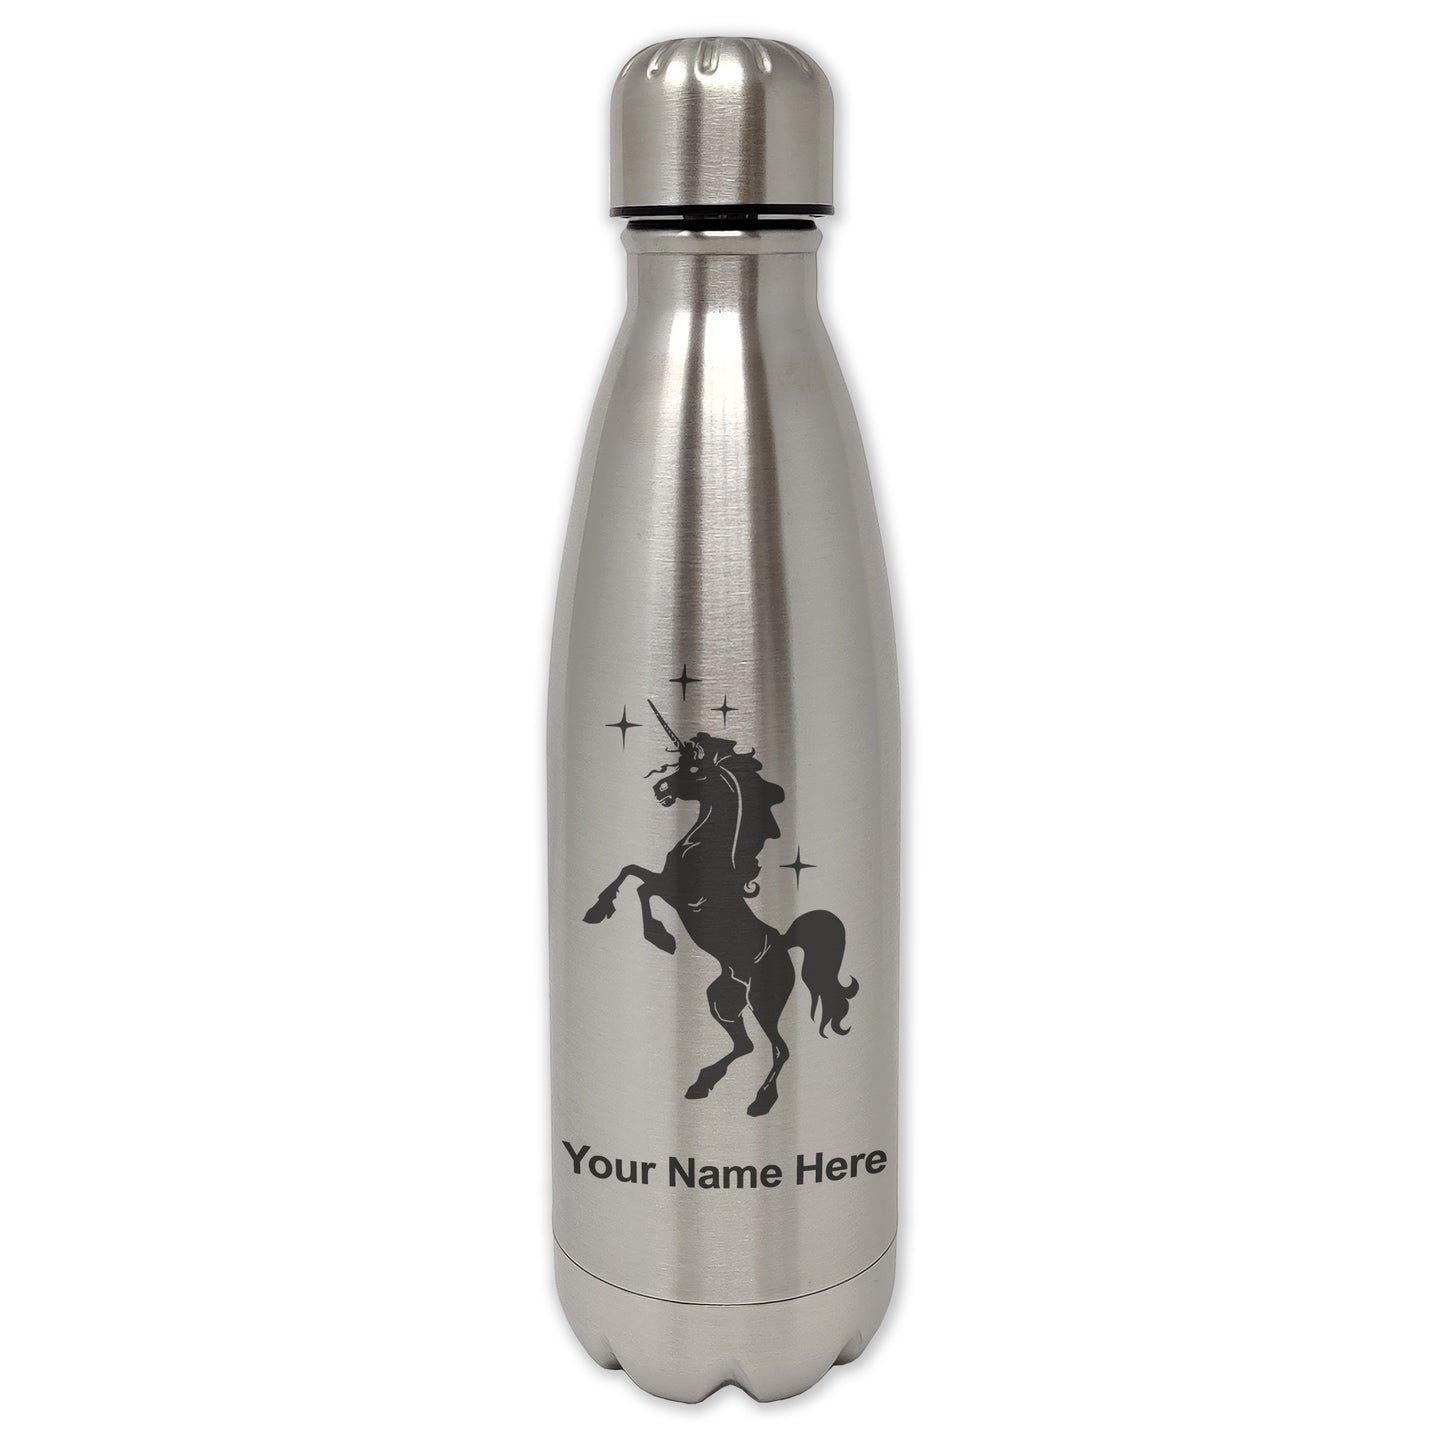 LaserGram Single Wall Water Bottle, Unicorn, Personalized Engraving Included